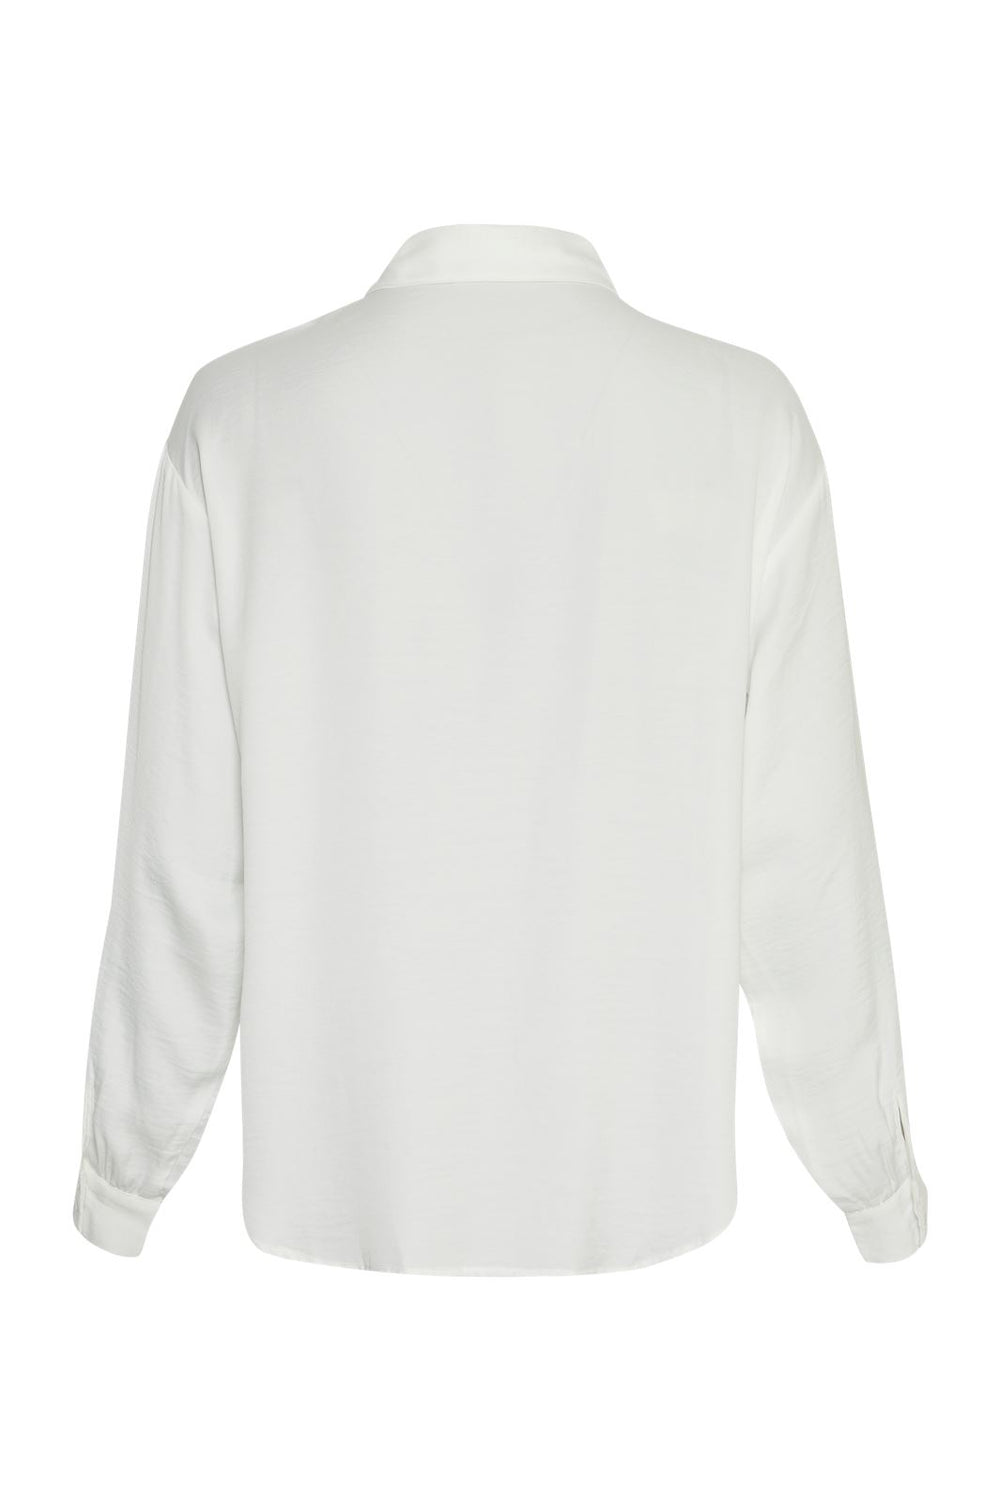 Moss Copenhagen - Mschsandeline Maluca Shirt - Cloud White